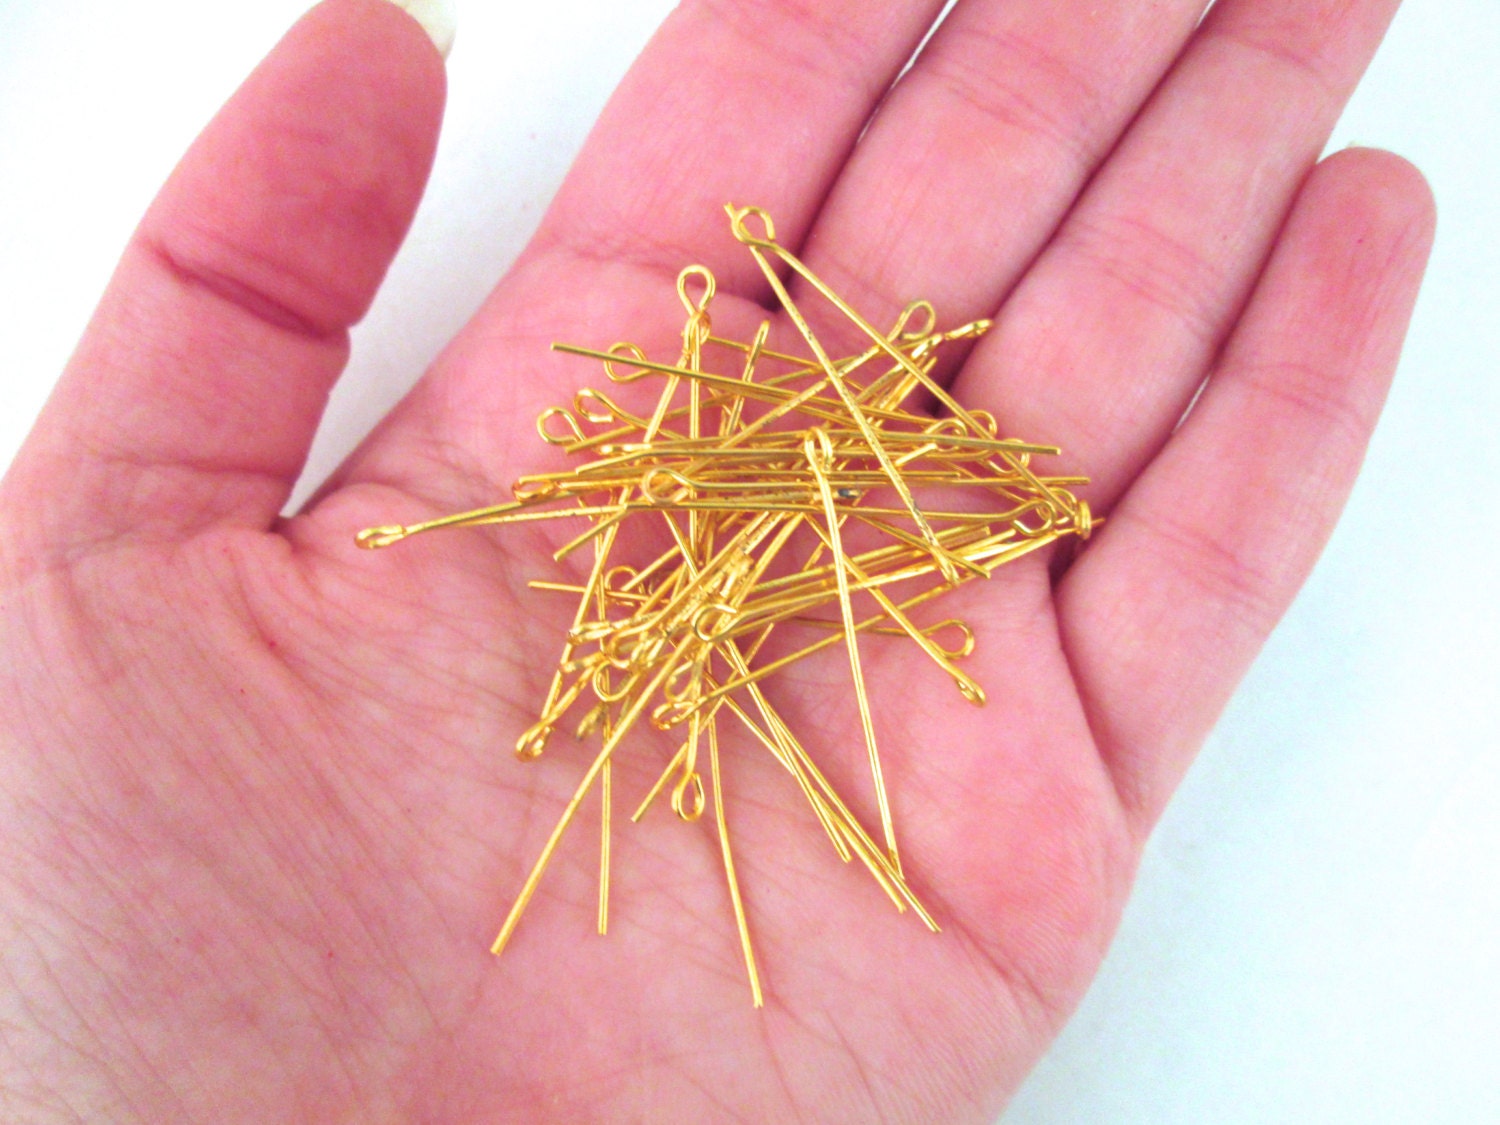 13-17mm Eye Pins, Gold Plated Eye Pins, Eyepins, Gold Head Pins